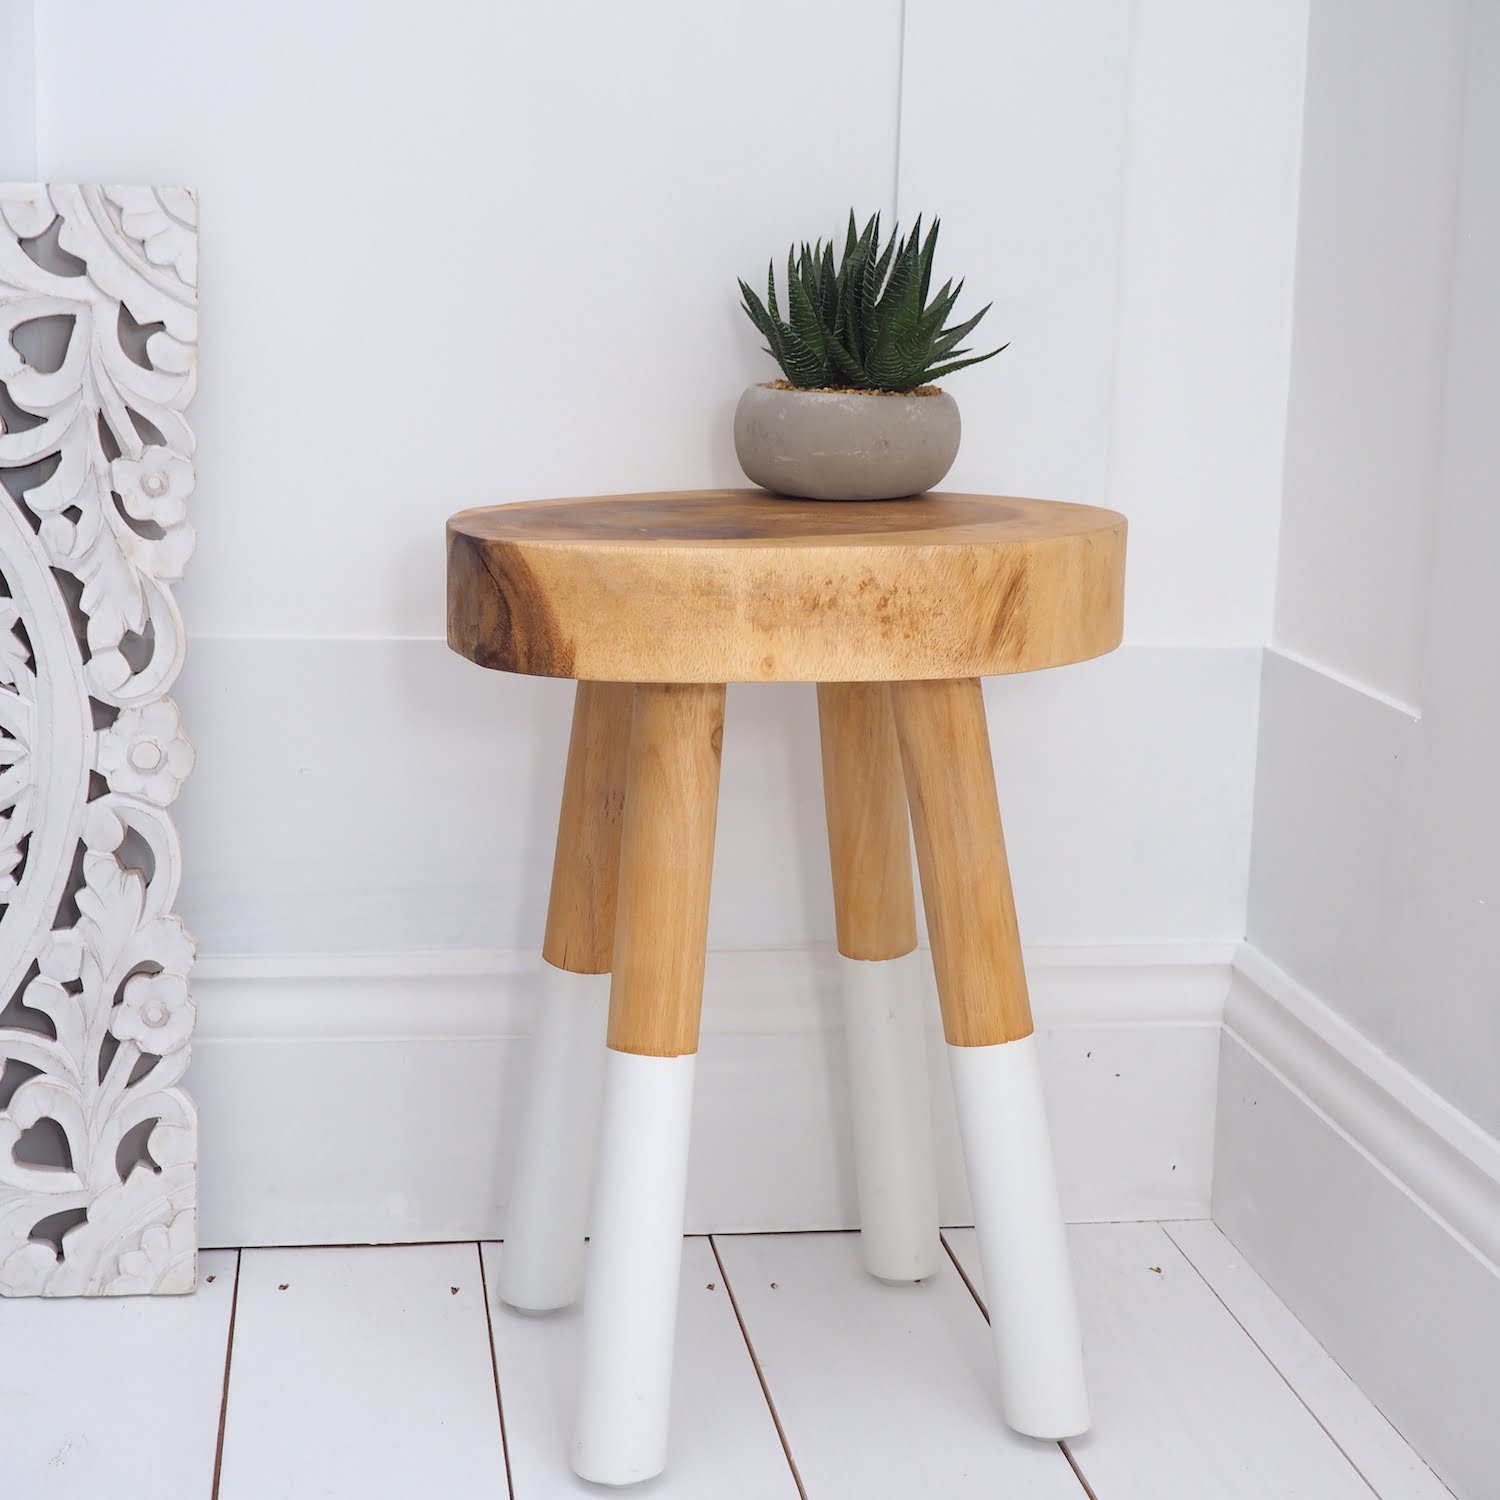 Organic Stool with Dipped White Legs - ZaZa Homes